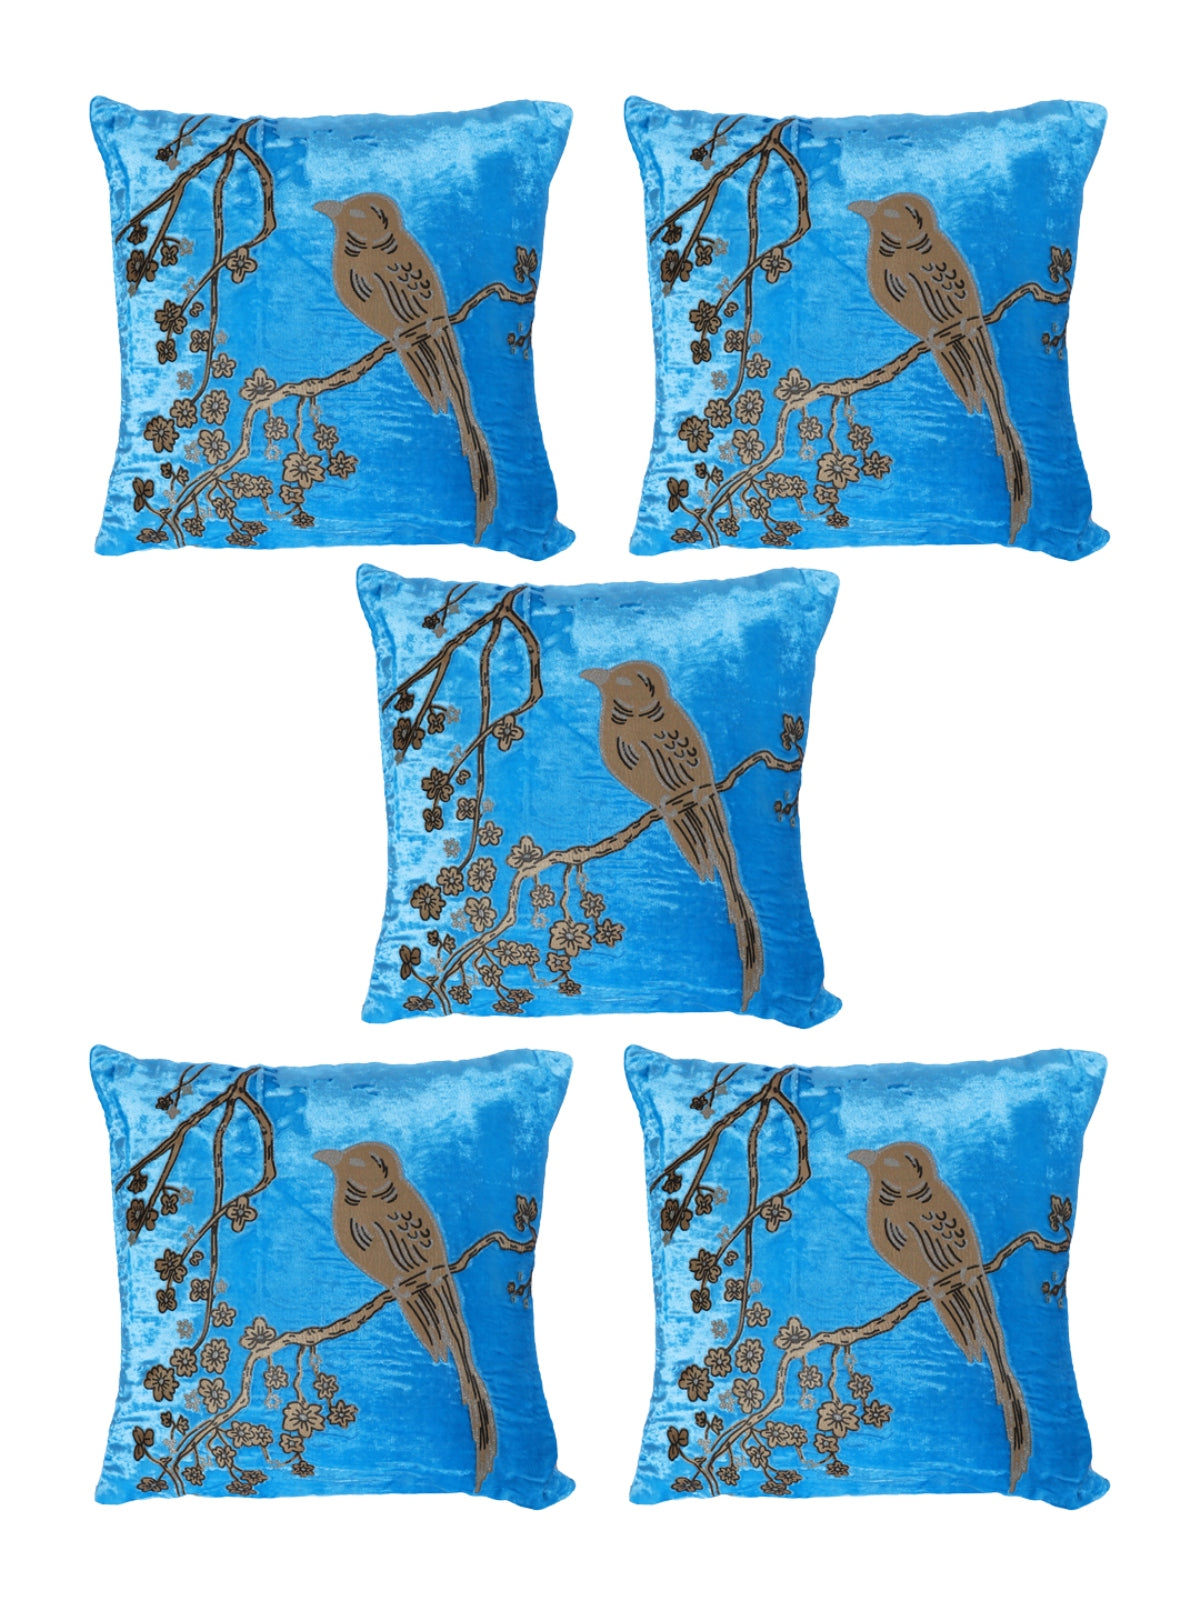 Velvet Floral & Bird Designer Cushion Cover 16x16 Inche, Set of 5 - Turquoise Blue